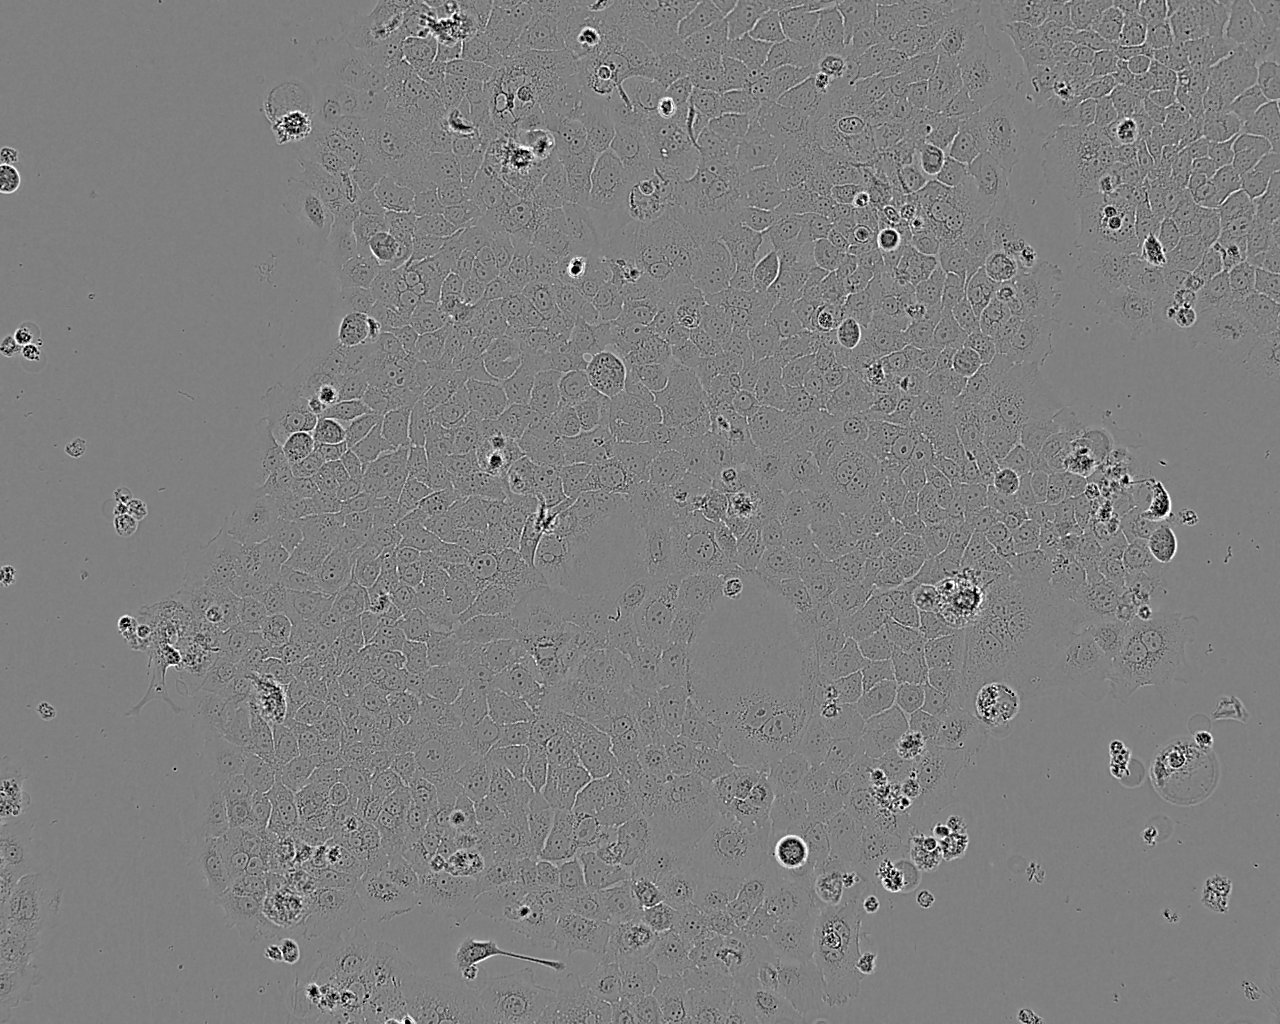 TE-10 Cells|人食管癌细胞系